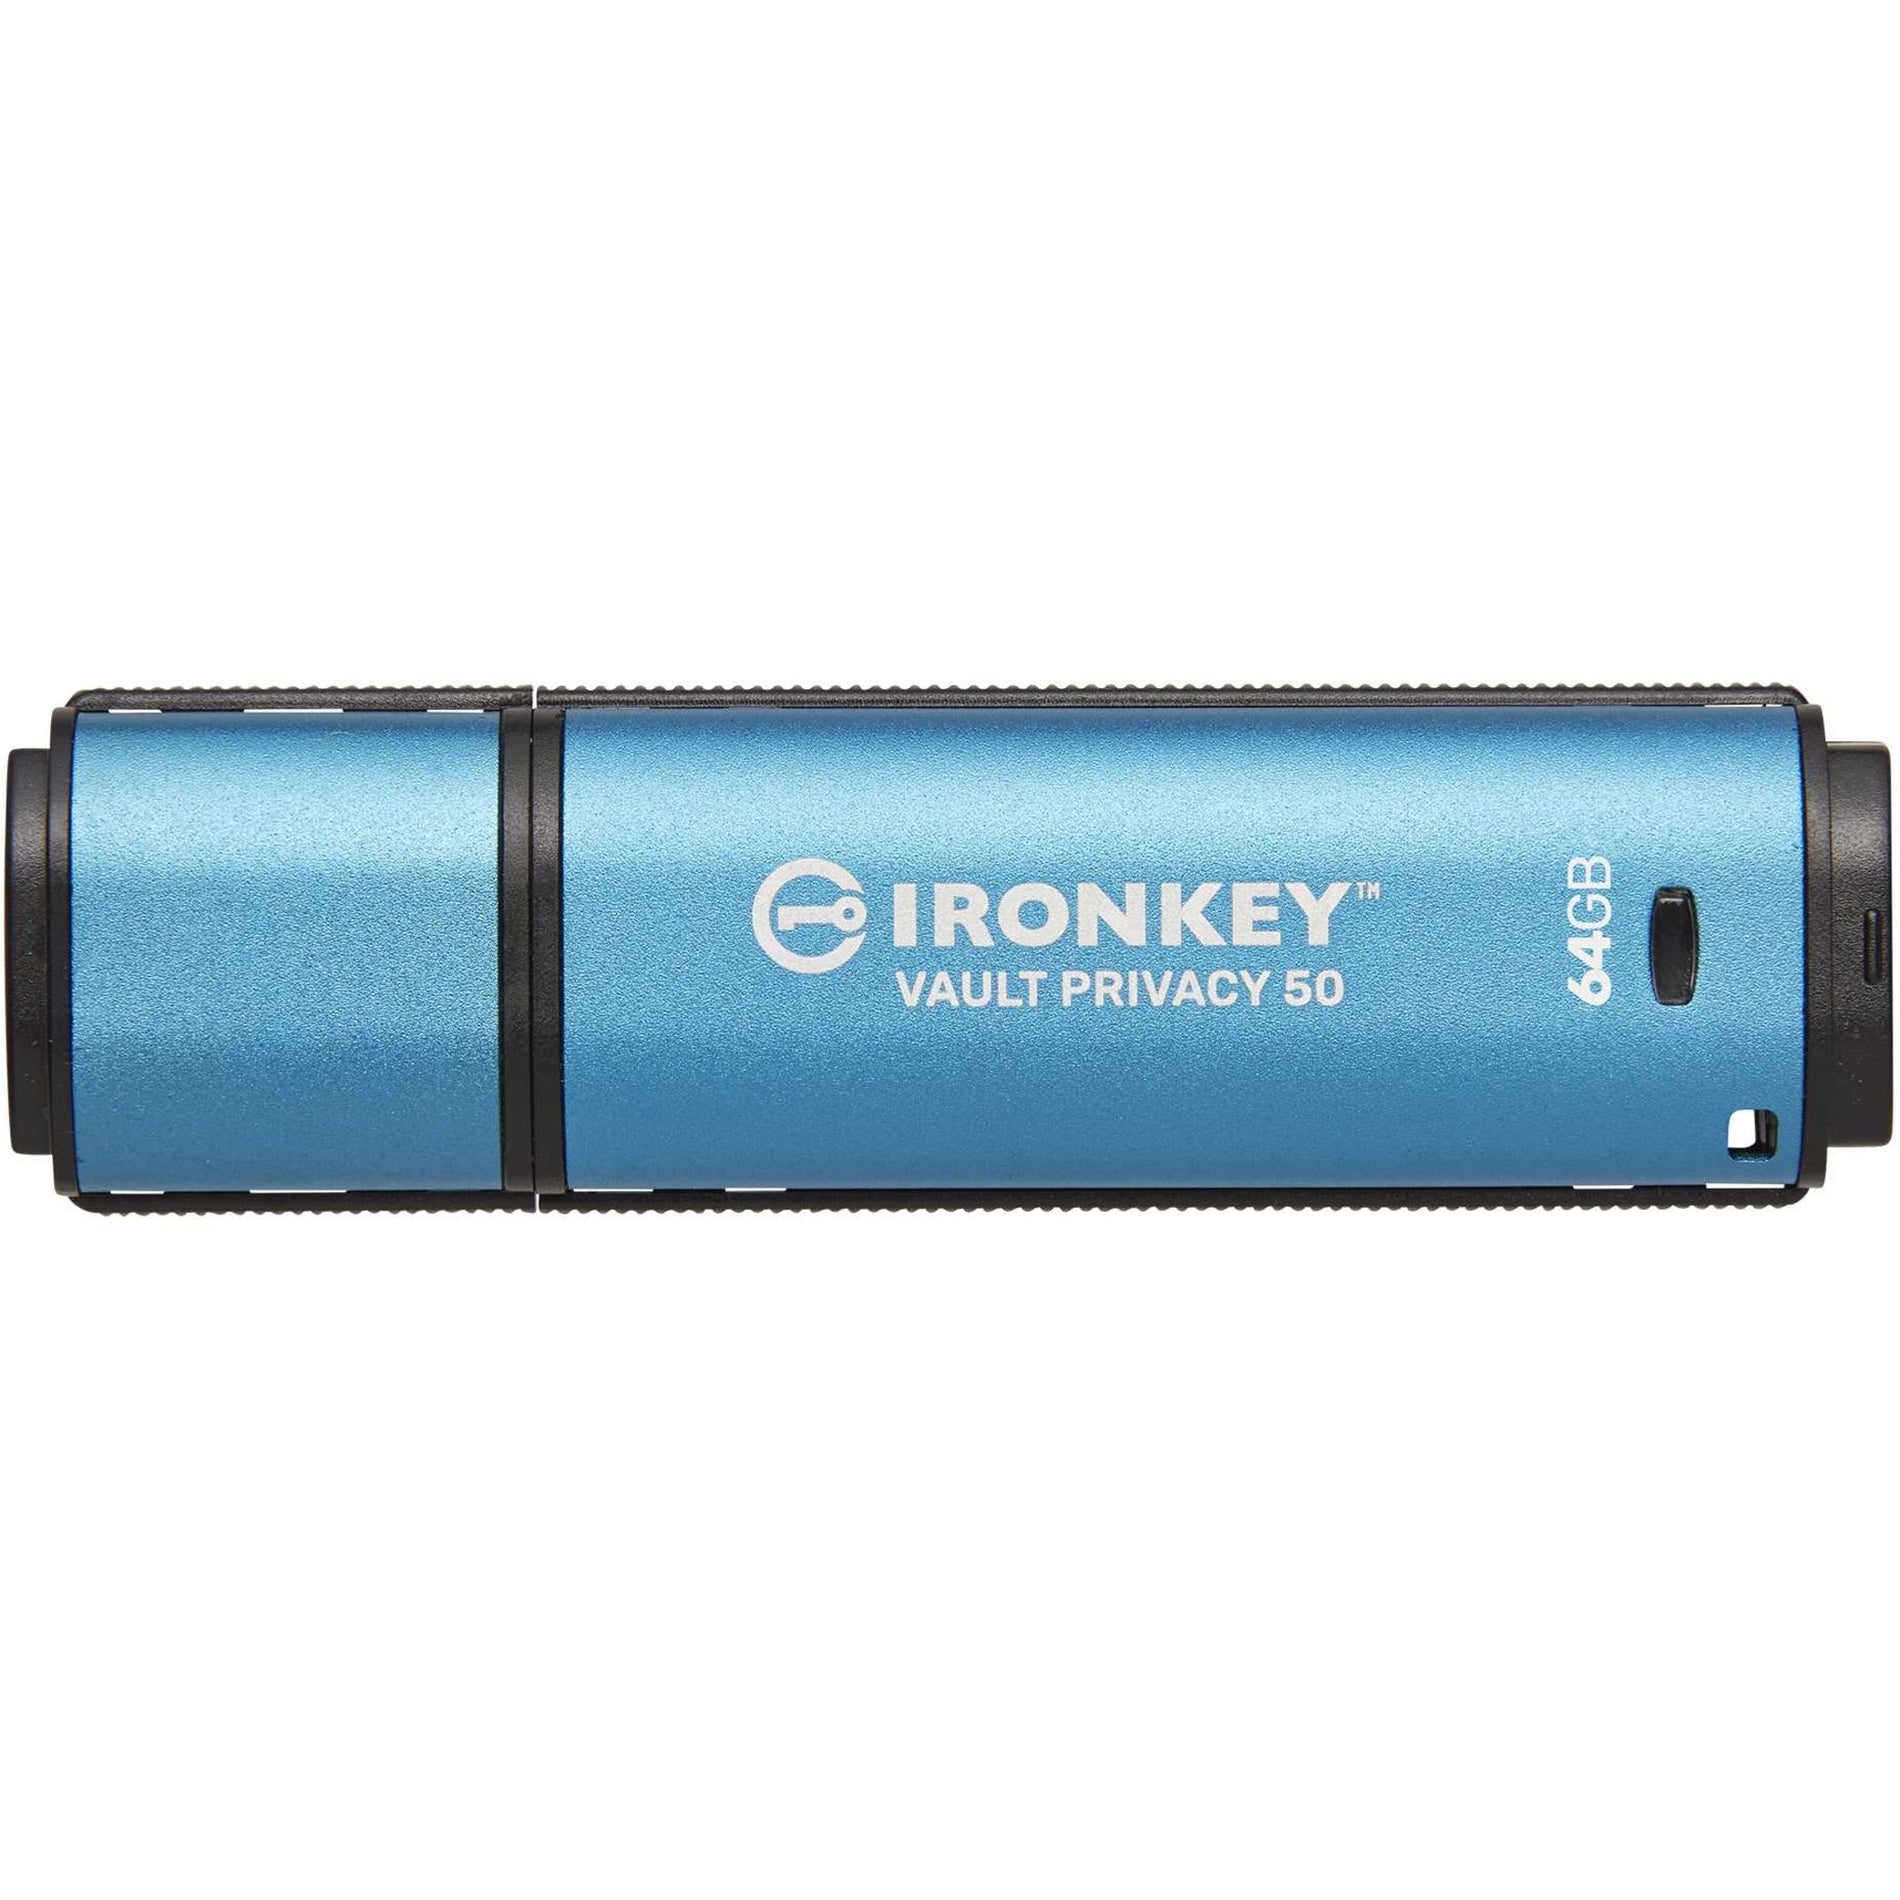 IronKey IKVP50/64GB سجن خزينة 50 سلسلة 64GB USB 3.2 (الجيل 1) نوع A محرك فلاش ، محمي بكلمة مرور ، تشفير AES بت 256 IronKey أيرون كي المسمى.